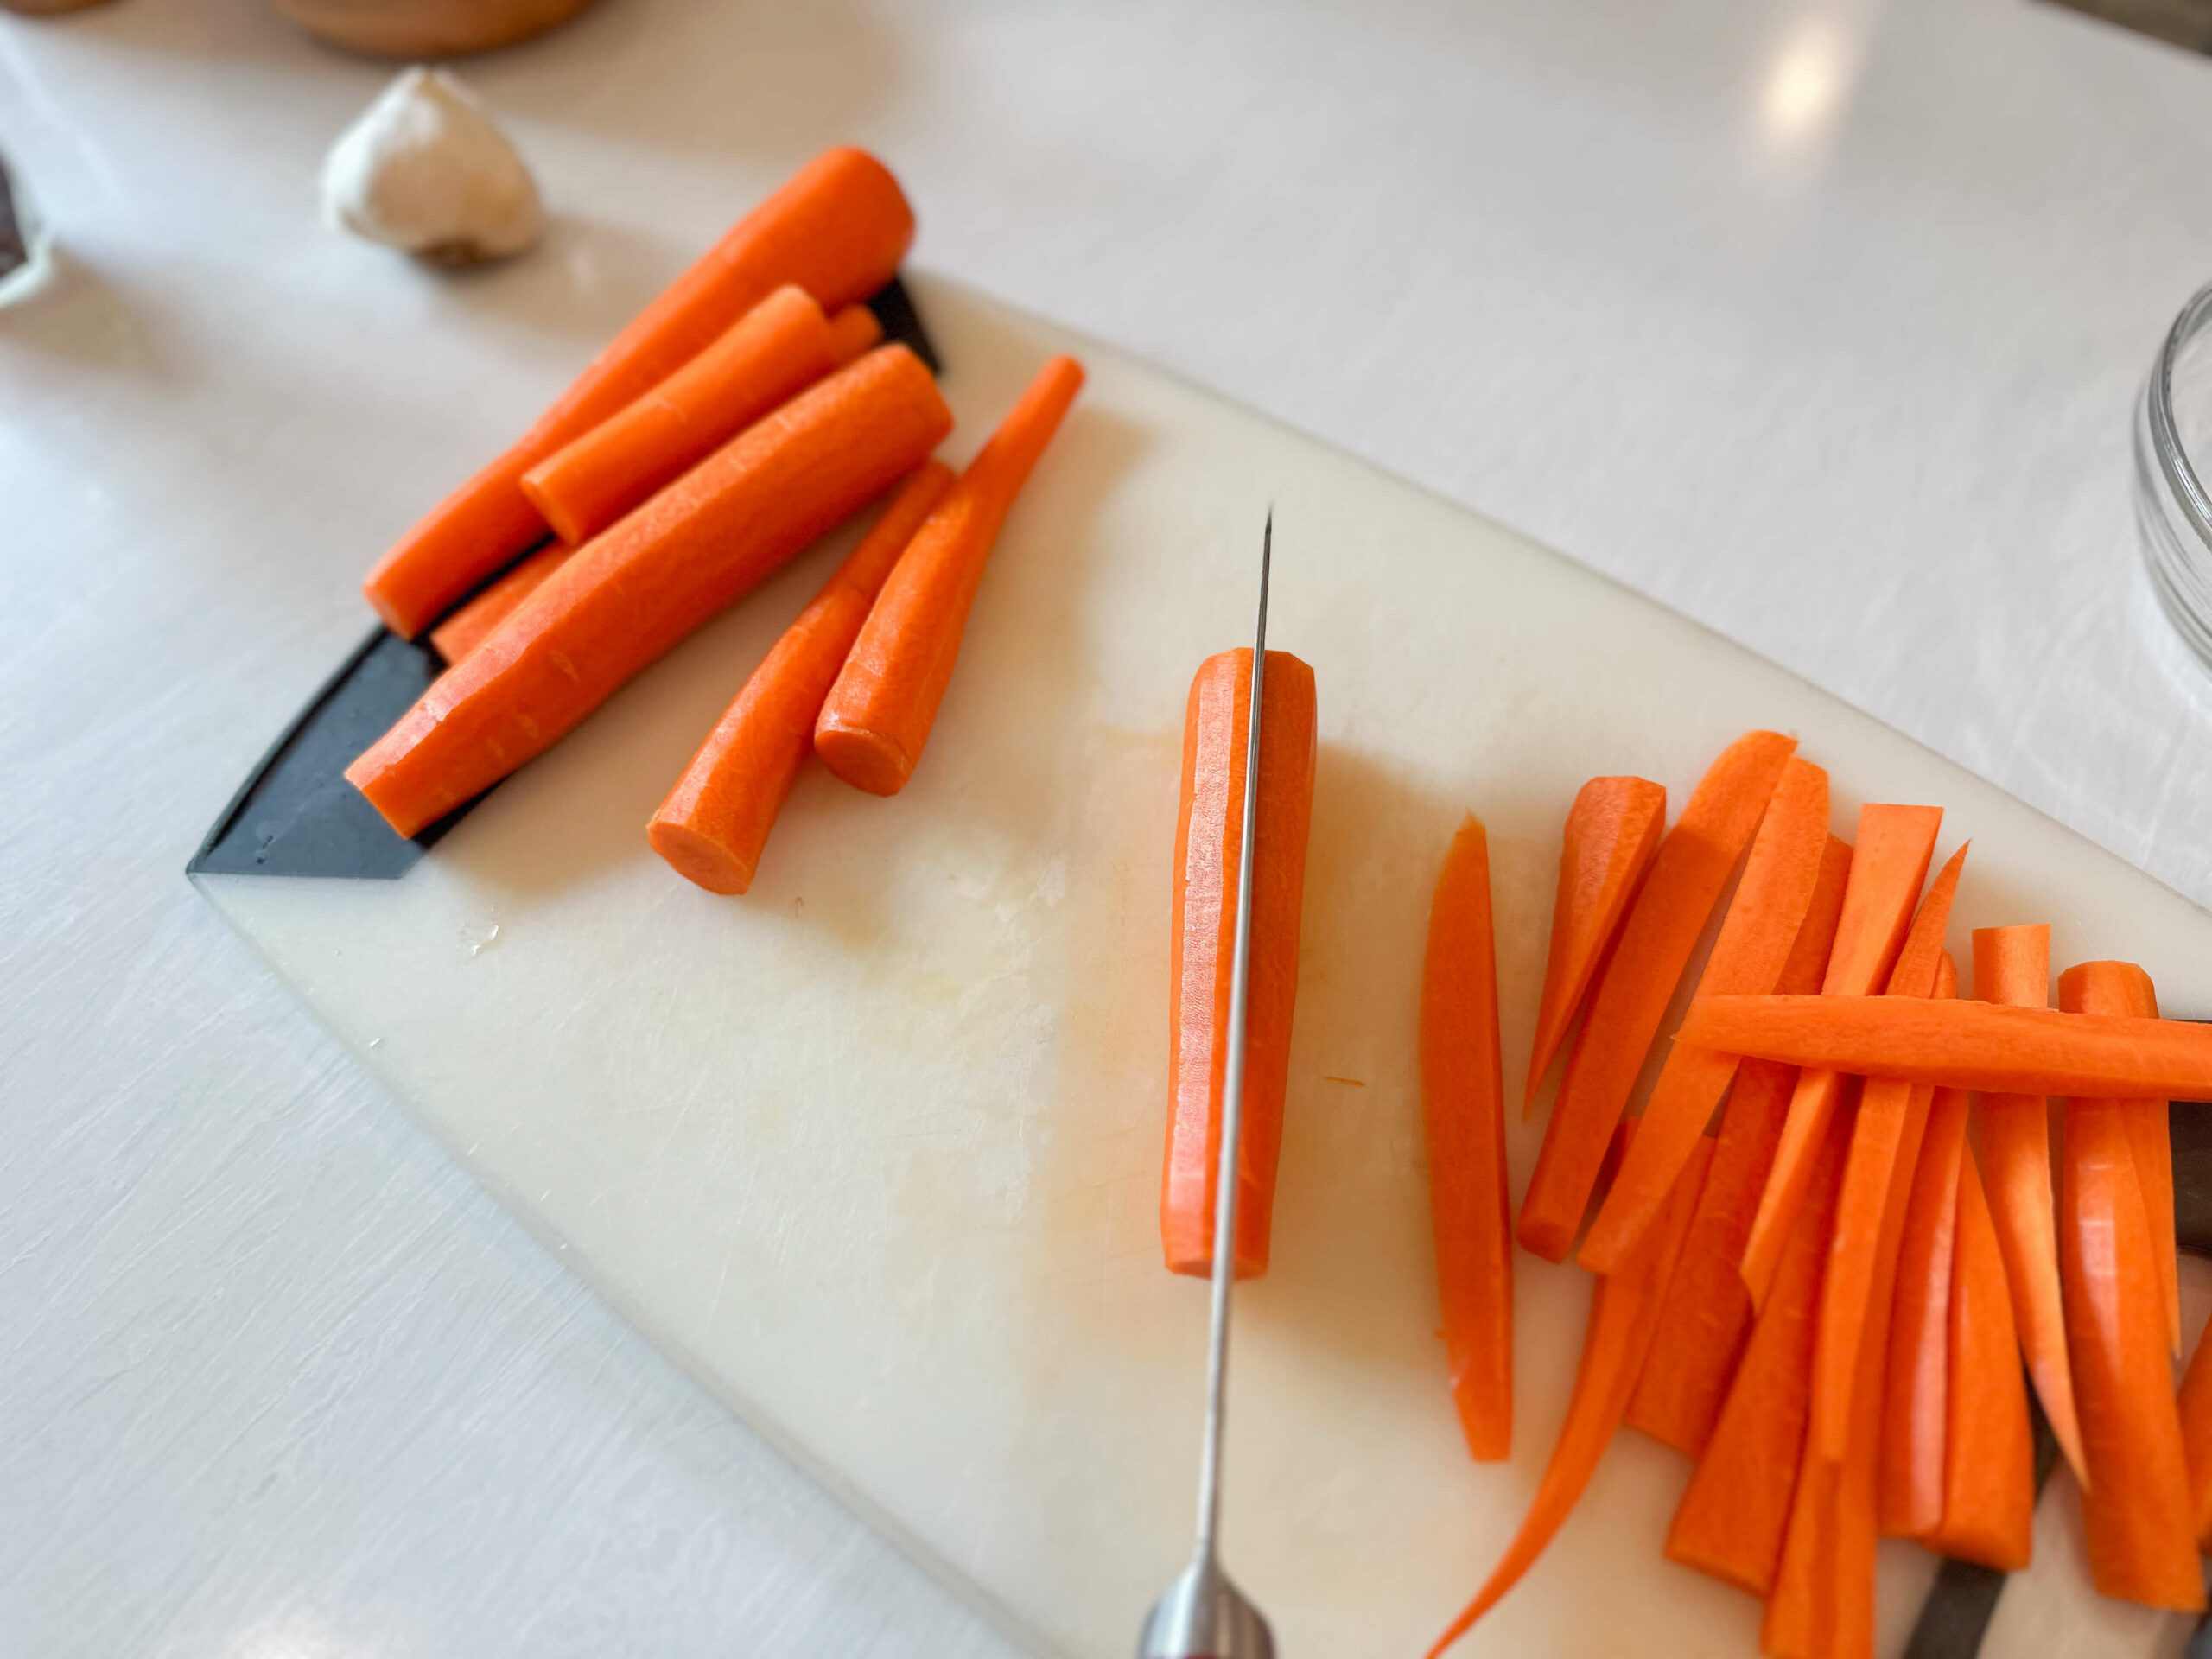 Carrots cut in half